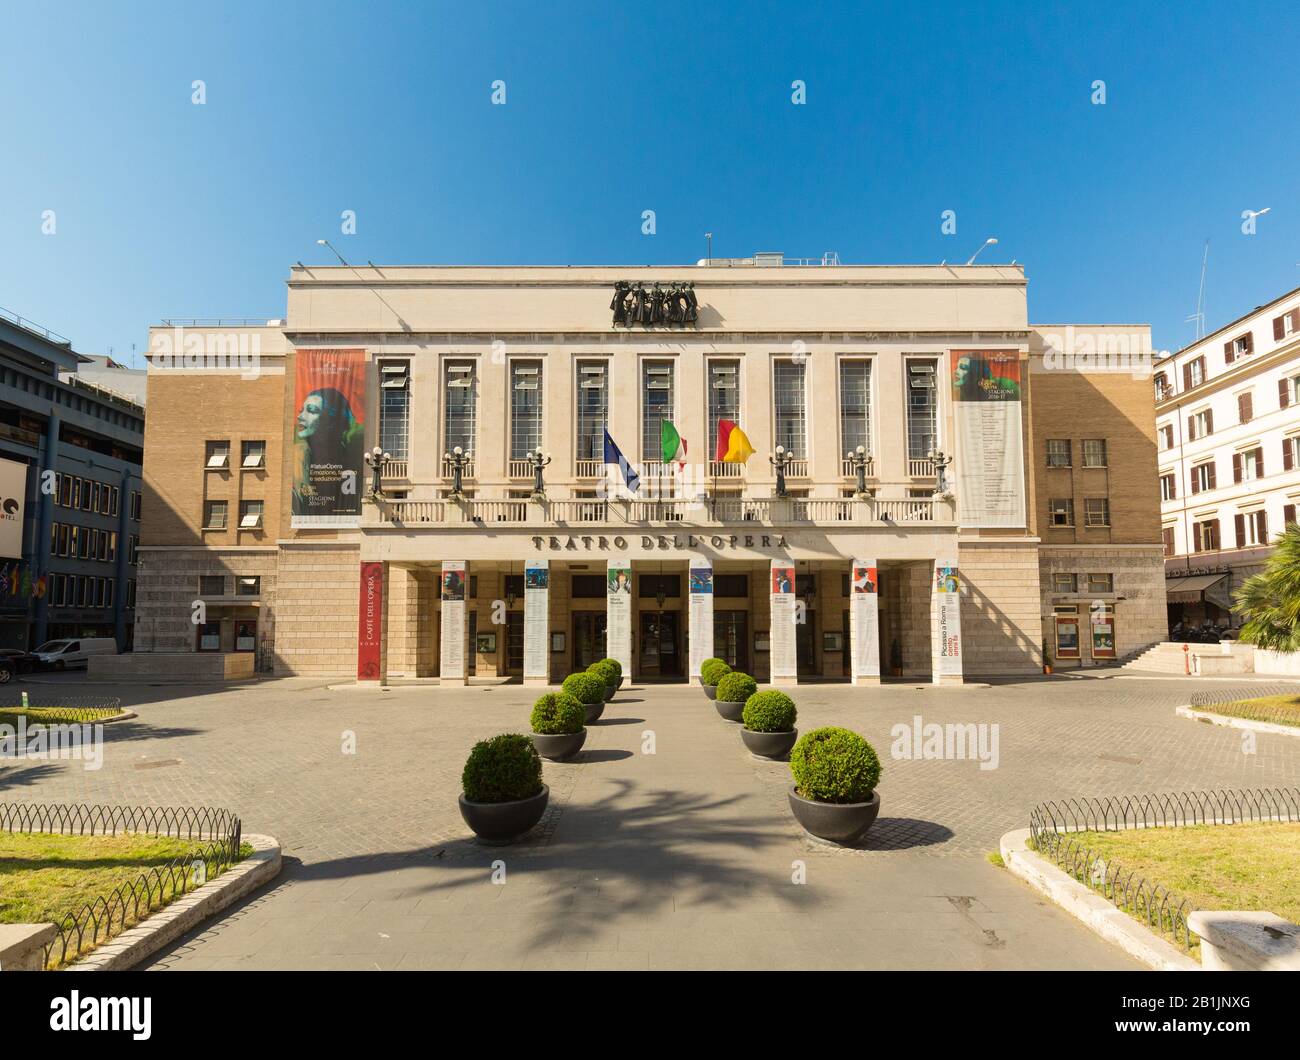 Teatro dell'Opera building in Rome, Italy Stock Photo - Alamy